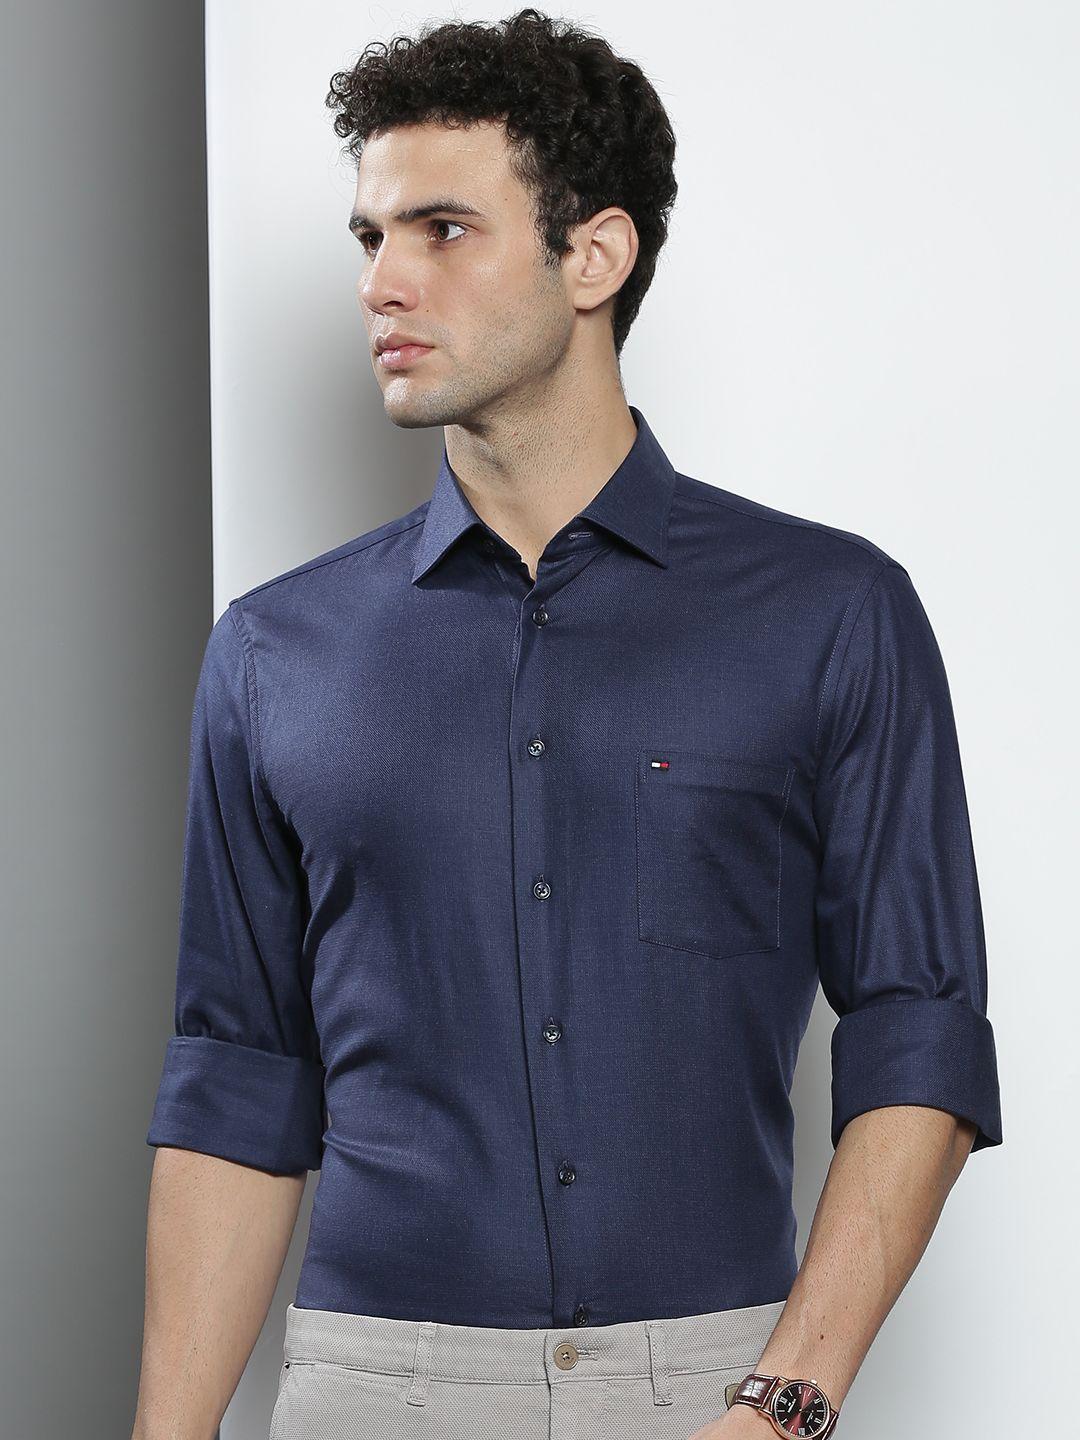 tommy-hilfiger-men-navy-blue-solid-cotton-denim-semiformal-shirt